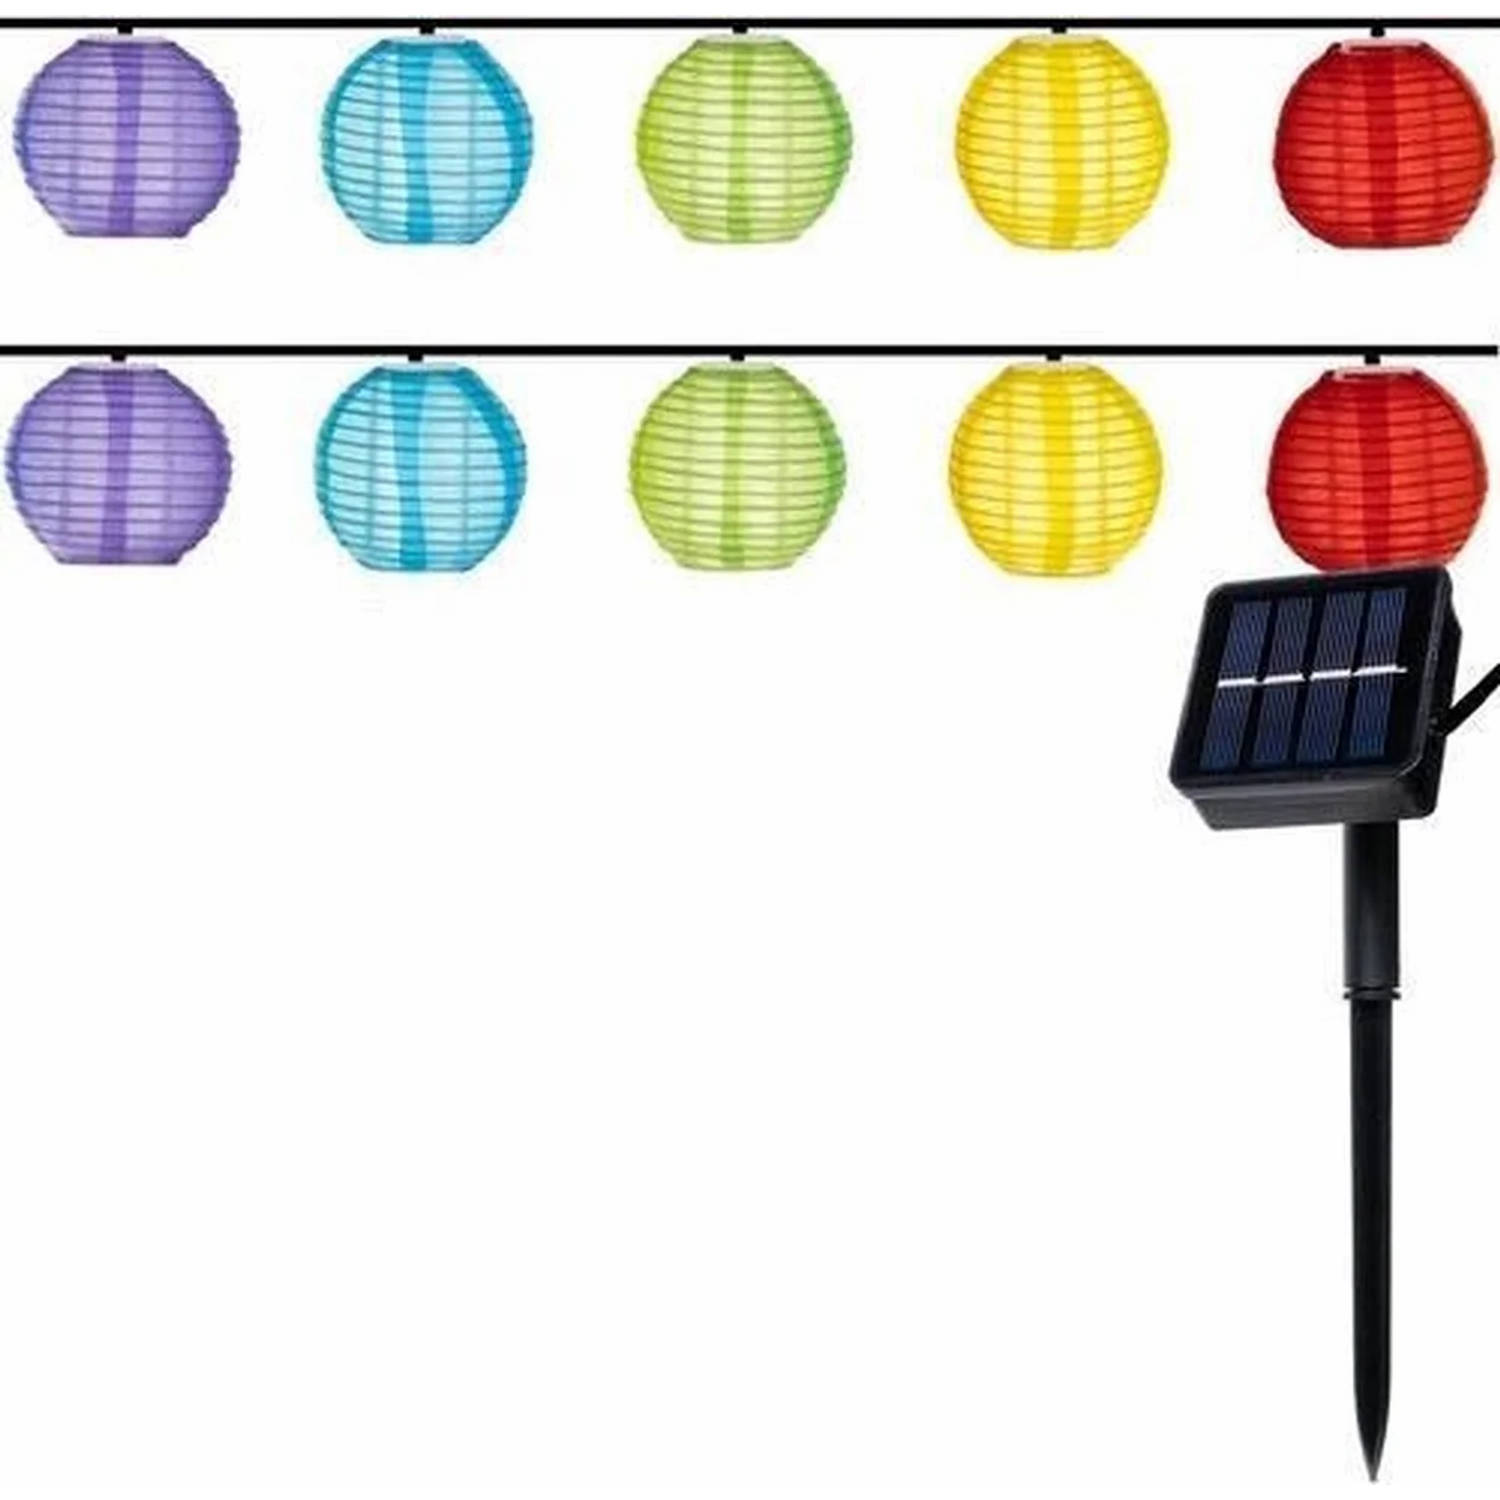 Lampion slinger feestverlichting op zonne-energie waterbestending LED 2,7m multi-color solar 10 lamp